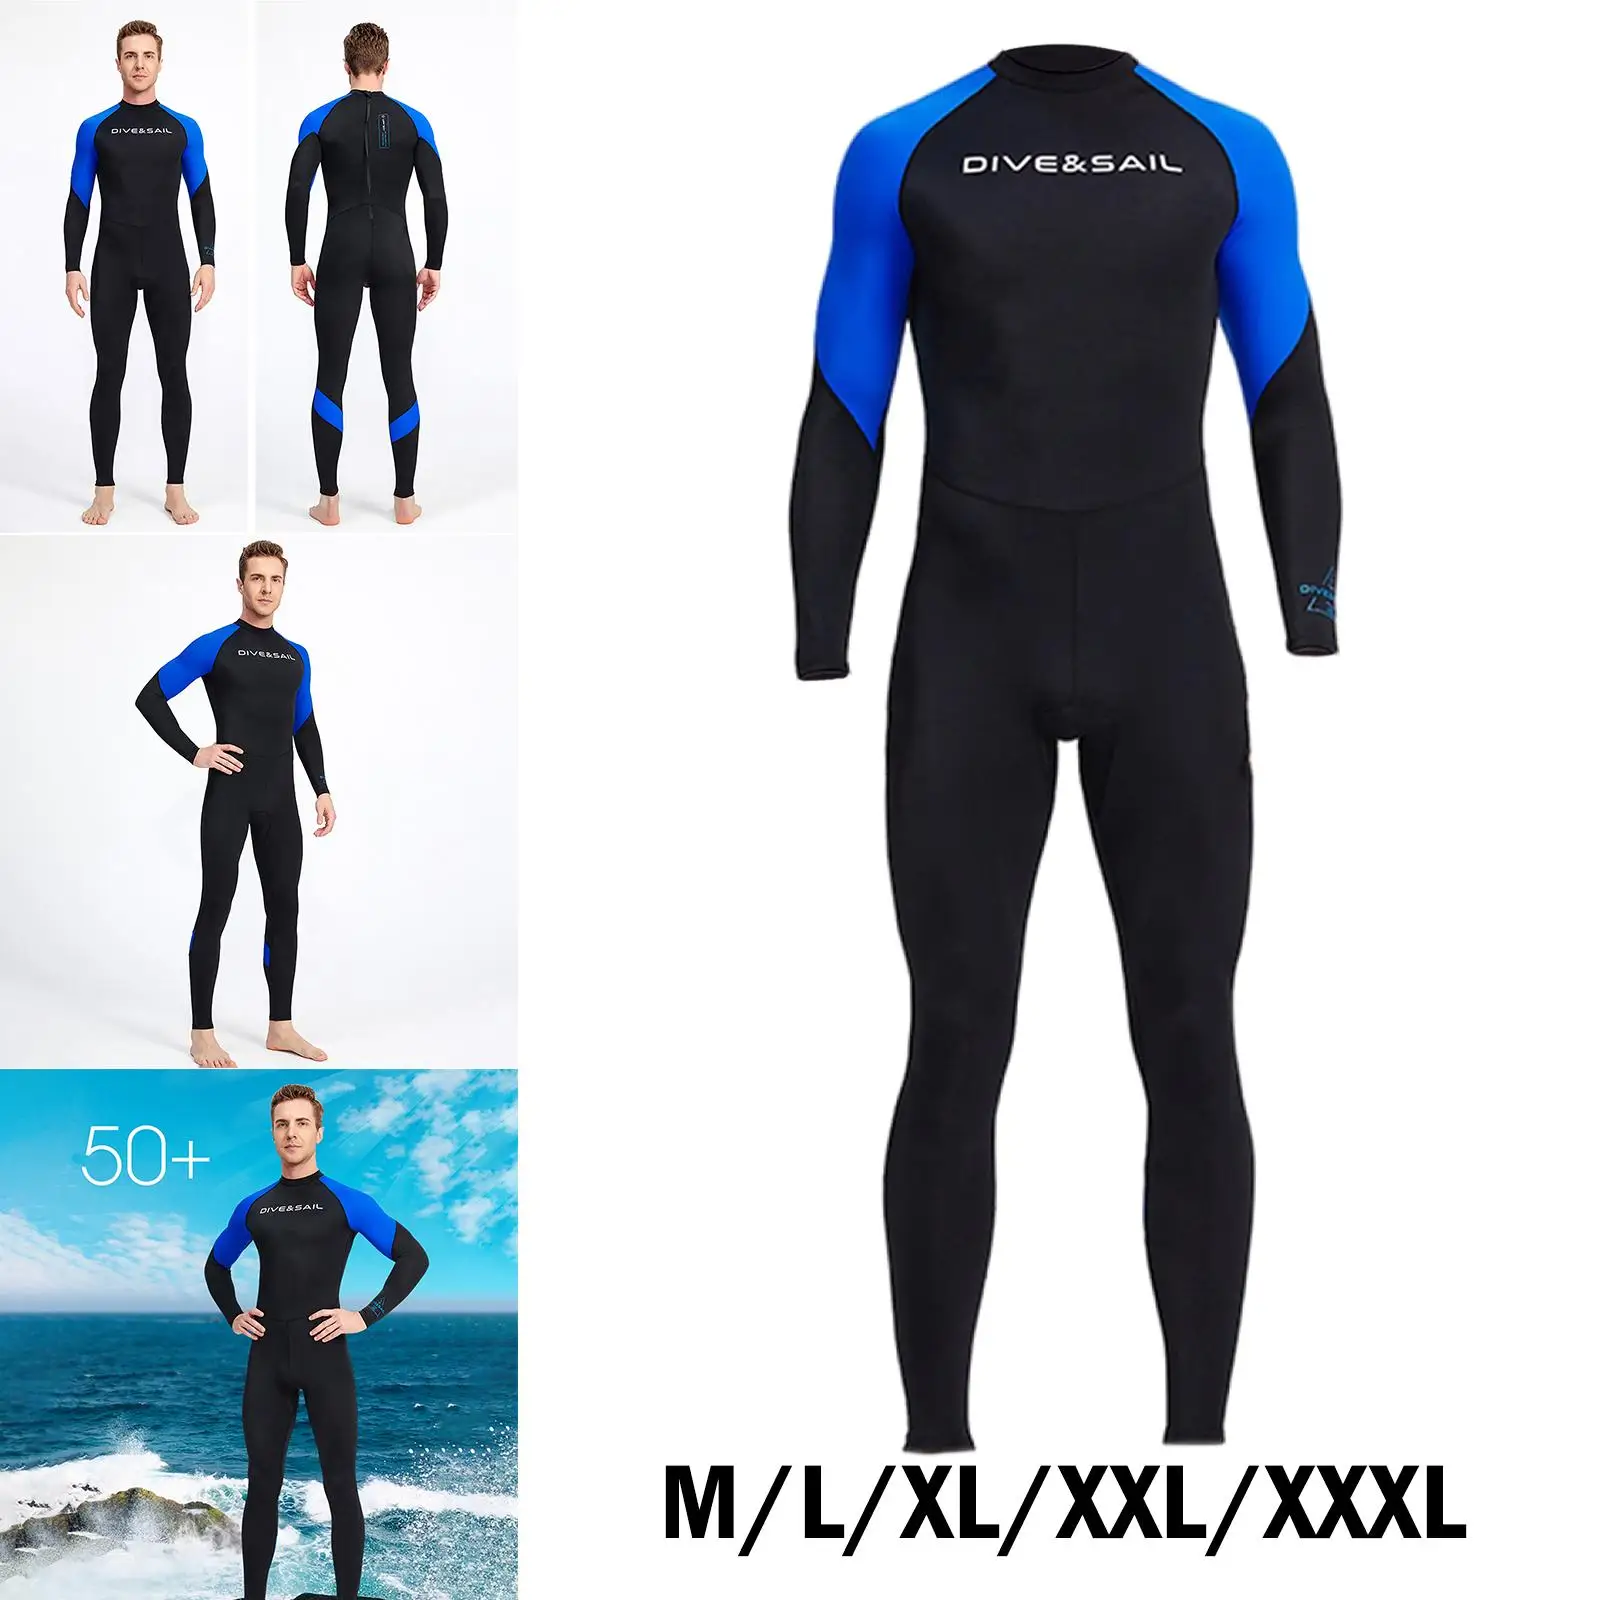 Men Women One Piece Wetsuit Long Sleeve Full Body Warm Rashguard Diving Swimming Surf Scuba Wet Suits Swimsuit